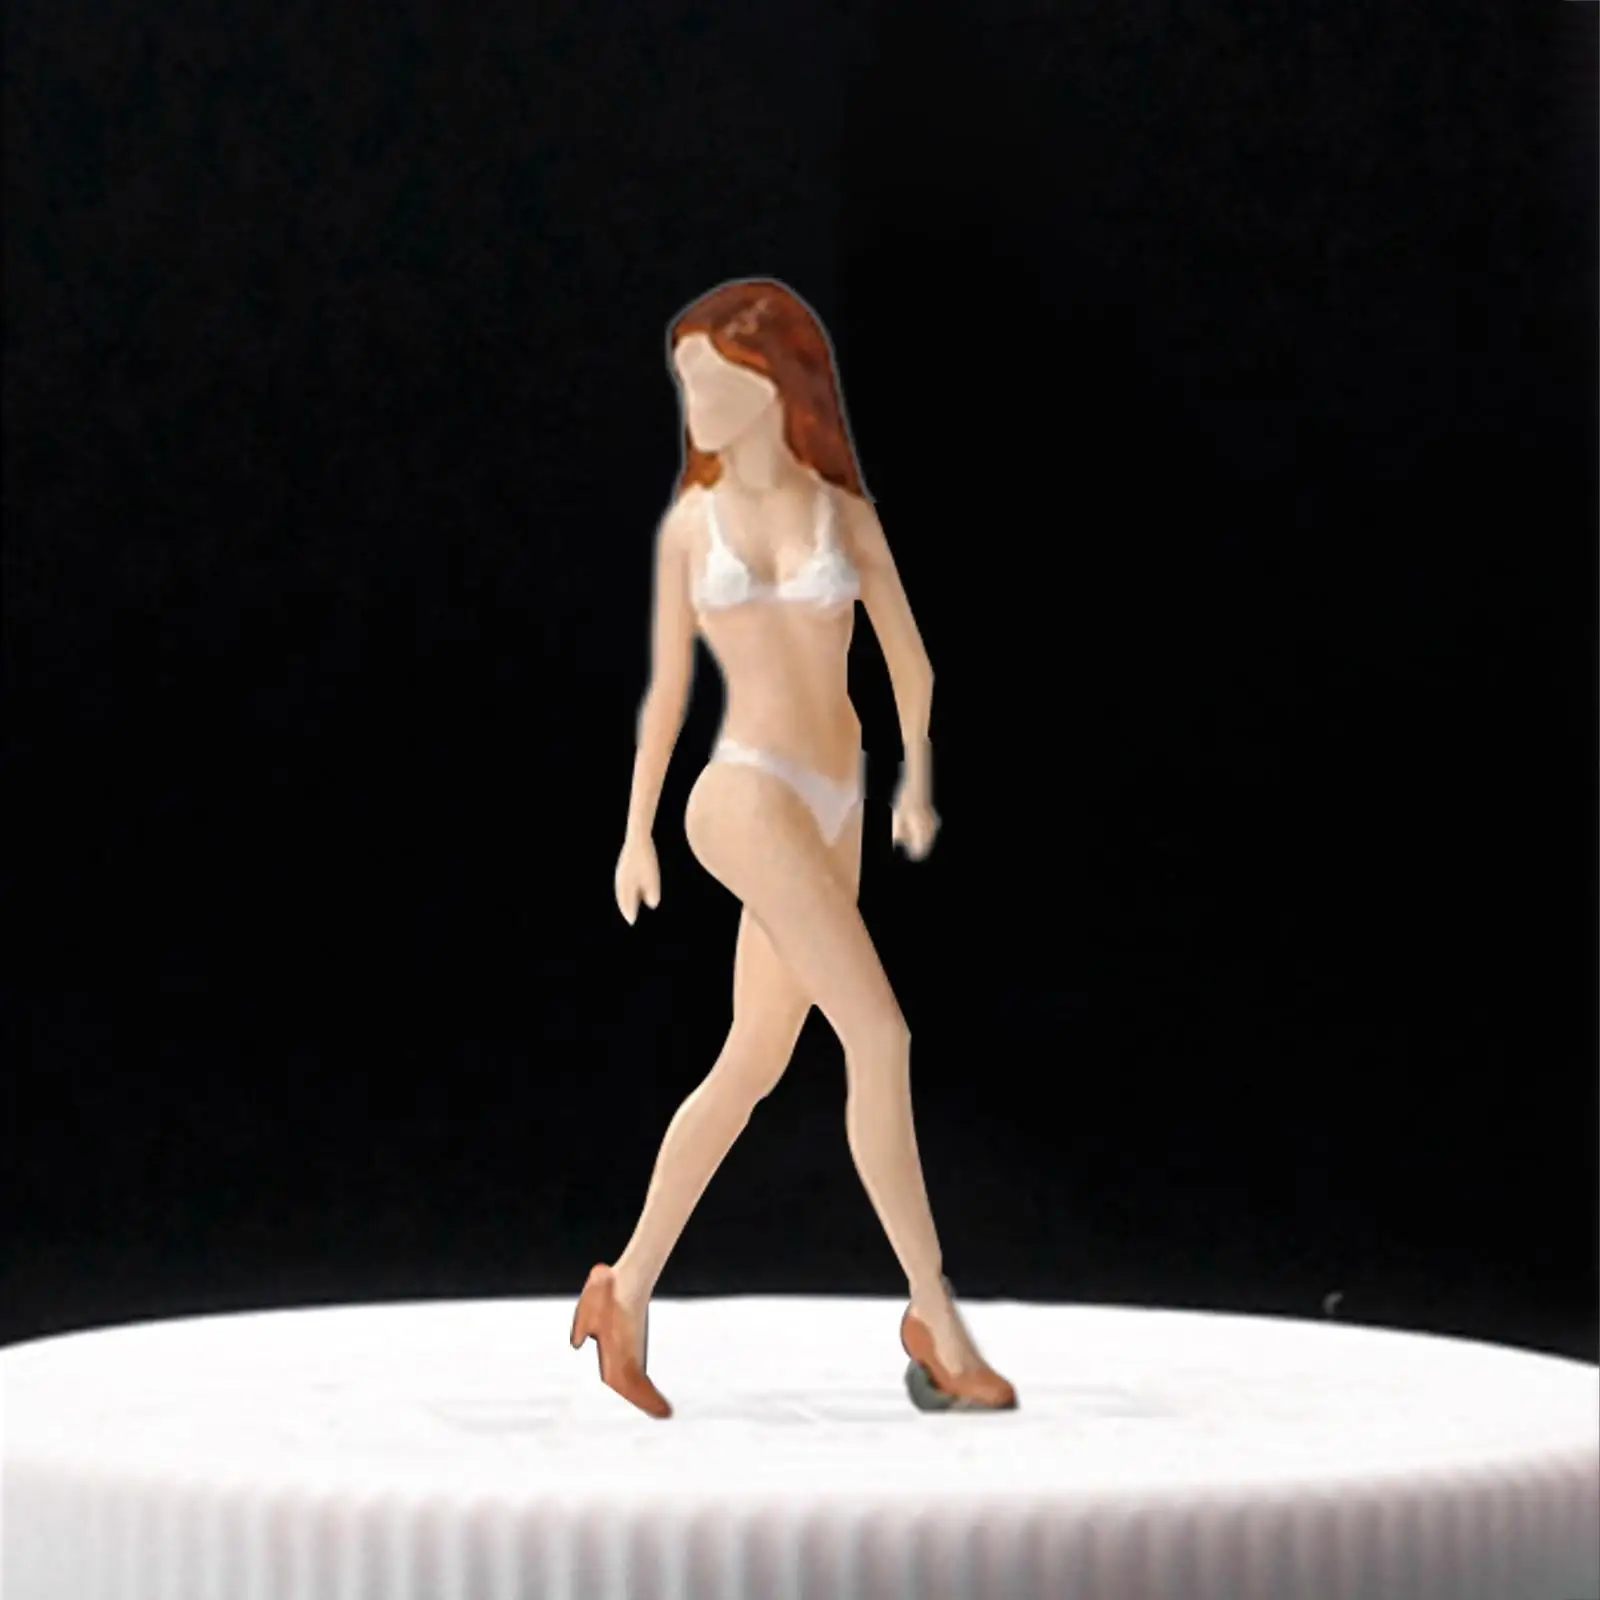 1/64 Scale Miniature Model Figures Ornament Miniature People Model 1/64 Female Models Figurine for DIY Scene DIY Projects Layout